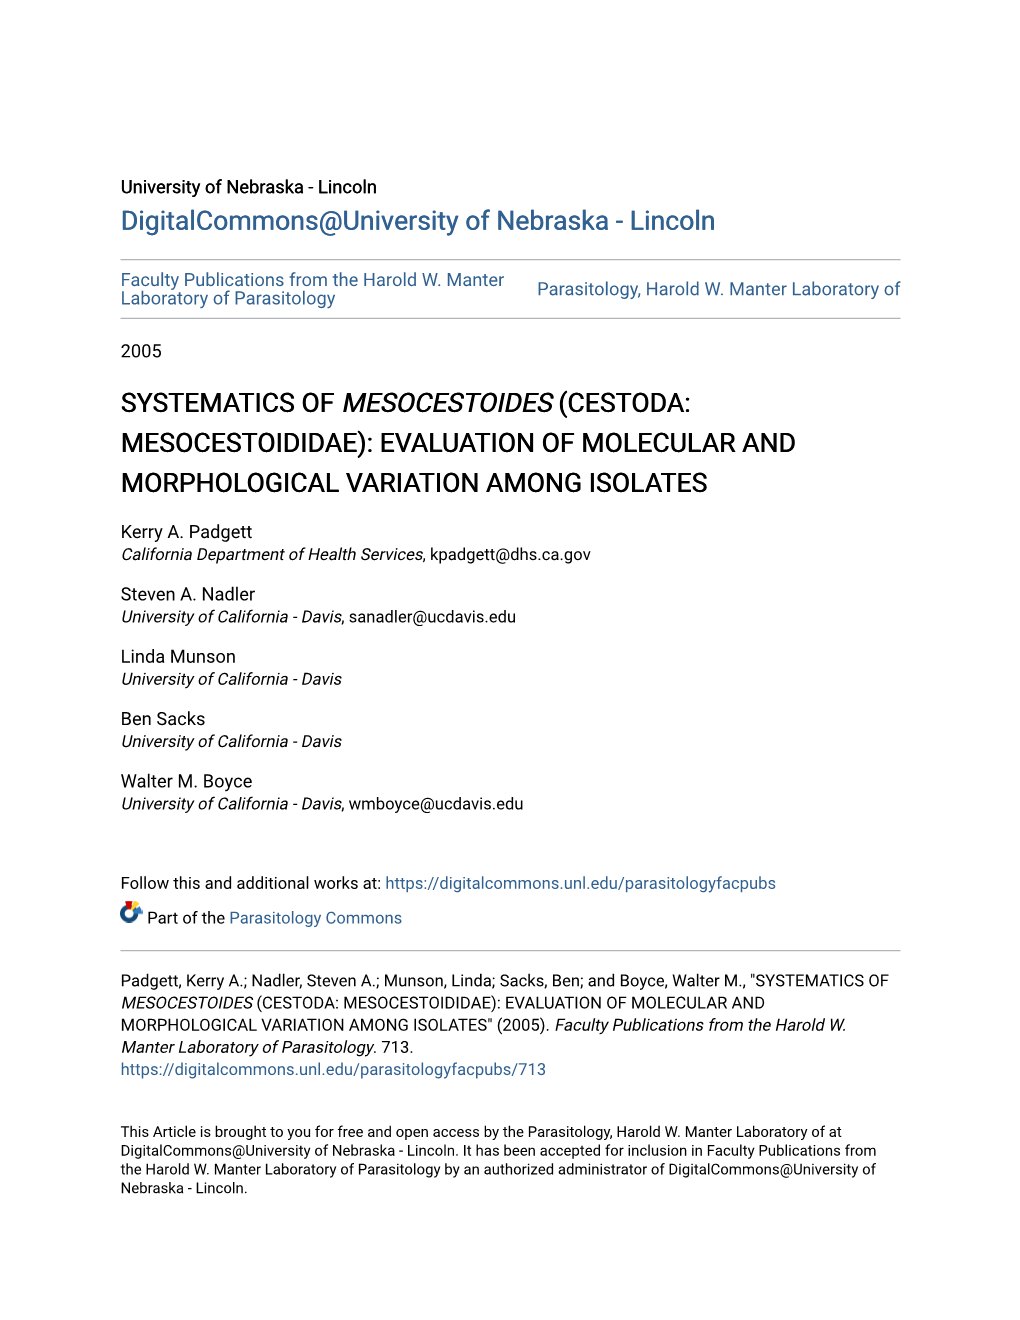 Systematics of Mesocestoides (Cestoda: Mesocestoididae): Evaluation of Molecular and Morphological Variation Among Isolates